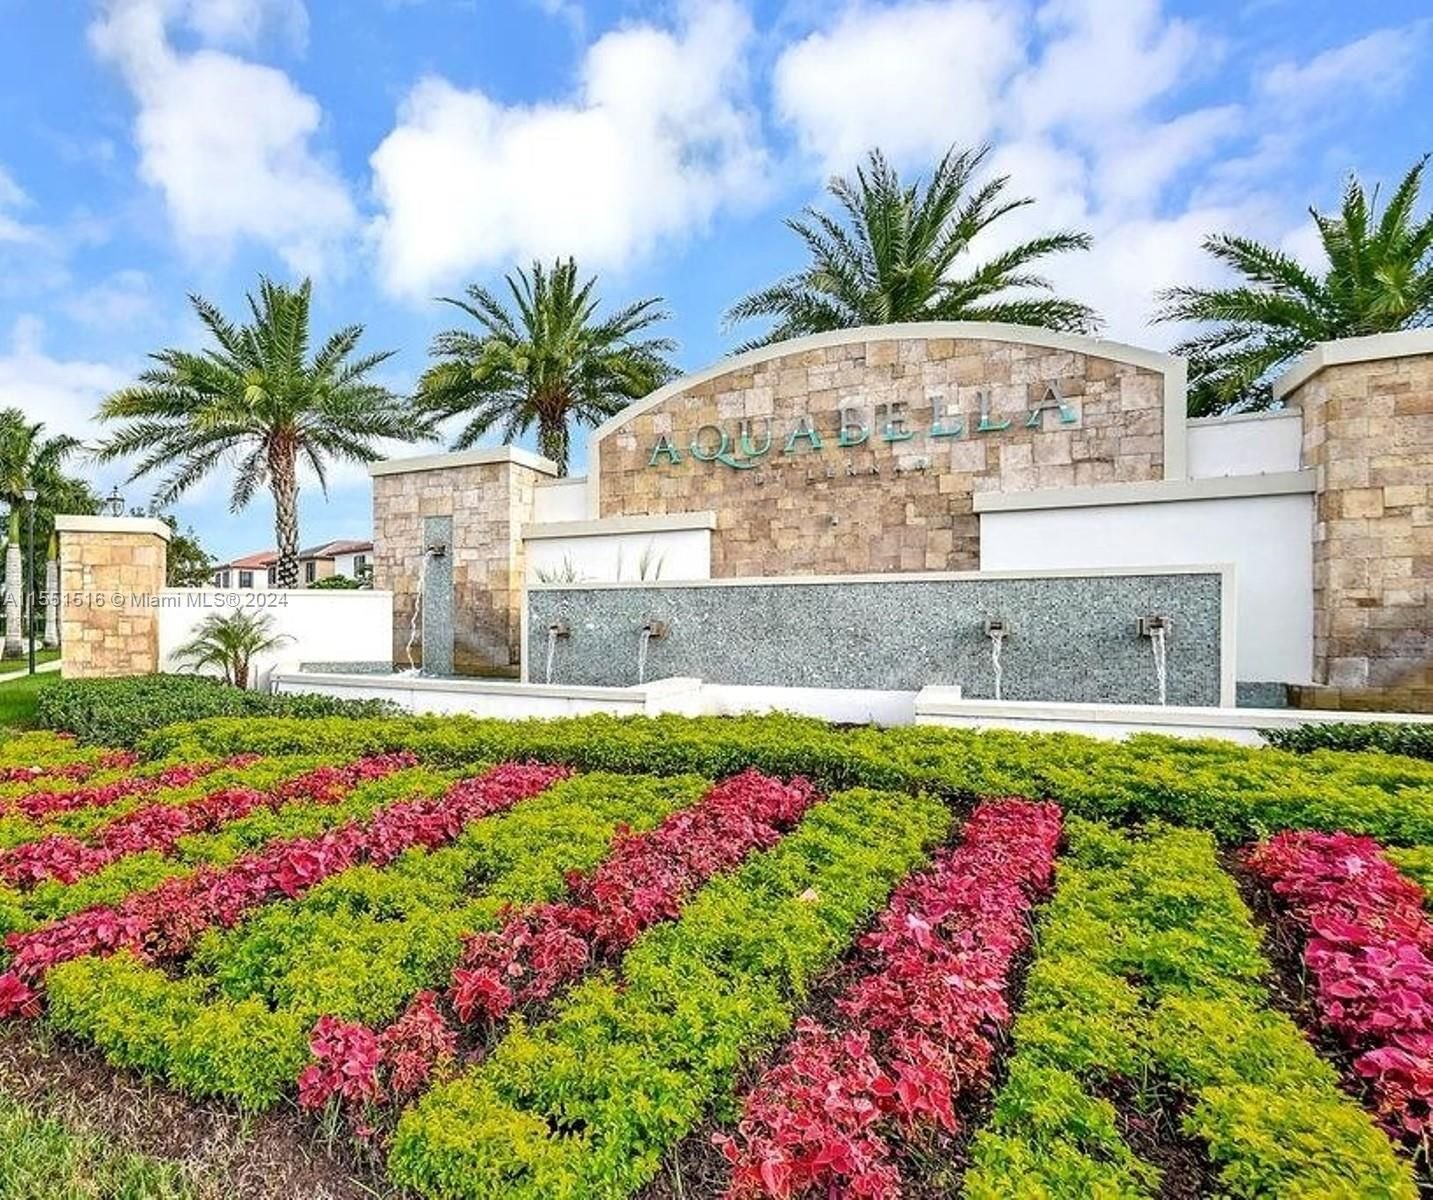 Real estate property located at 11426 33rd Way, Miami-Dade County, AQUABELLA NORTH, Hialeah, FL